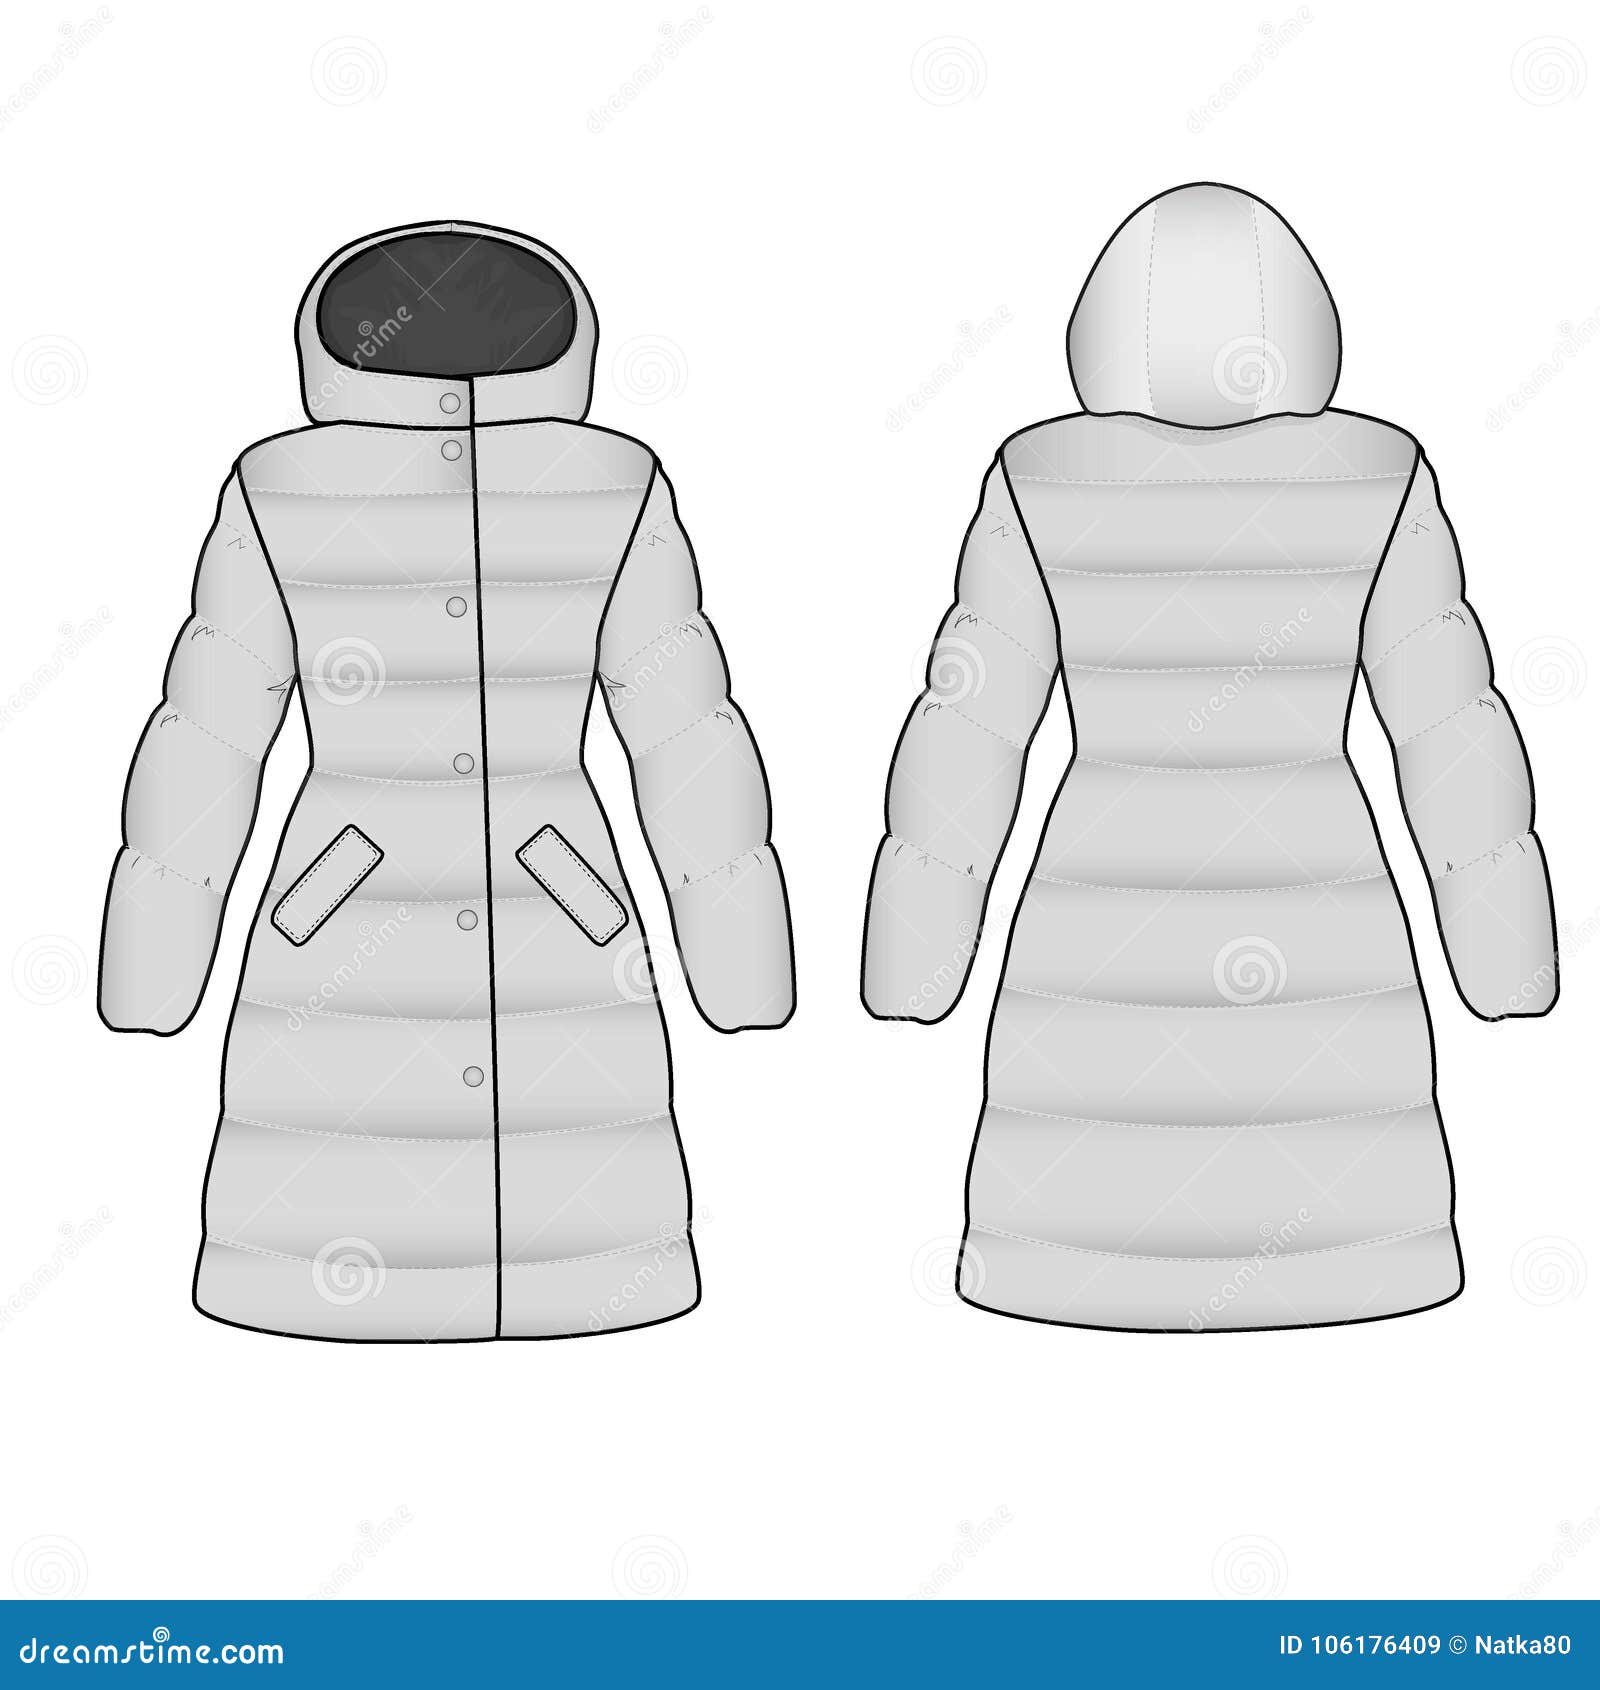 The Sketch Womens Snow Jacket Stock Vector - Illustration of showerproof,  rainy: 106176409